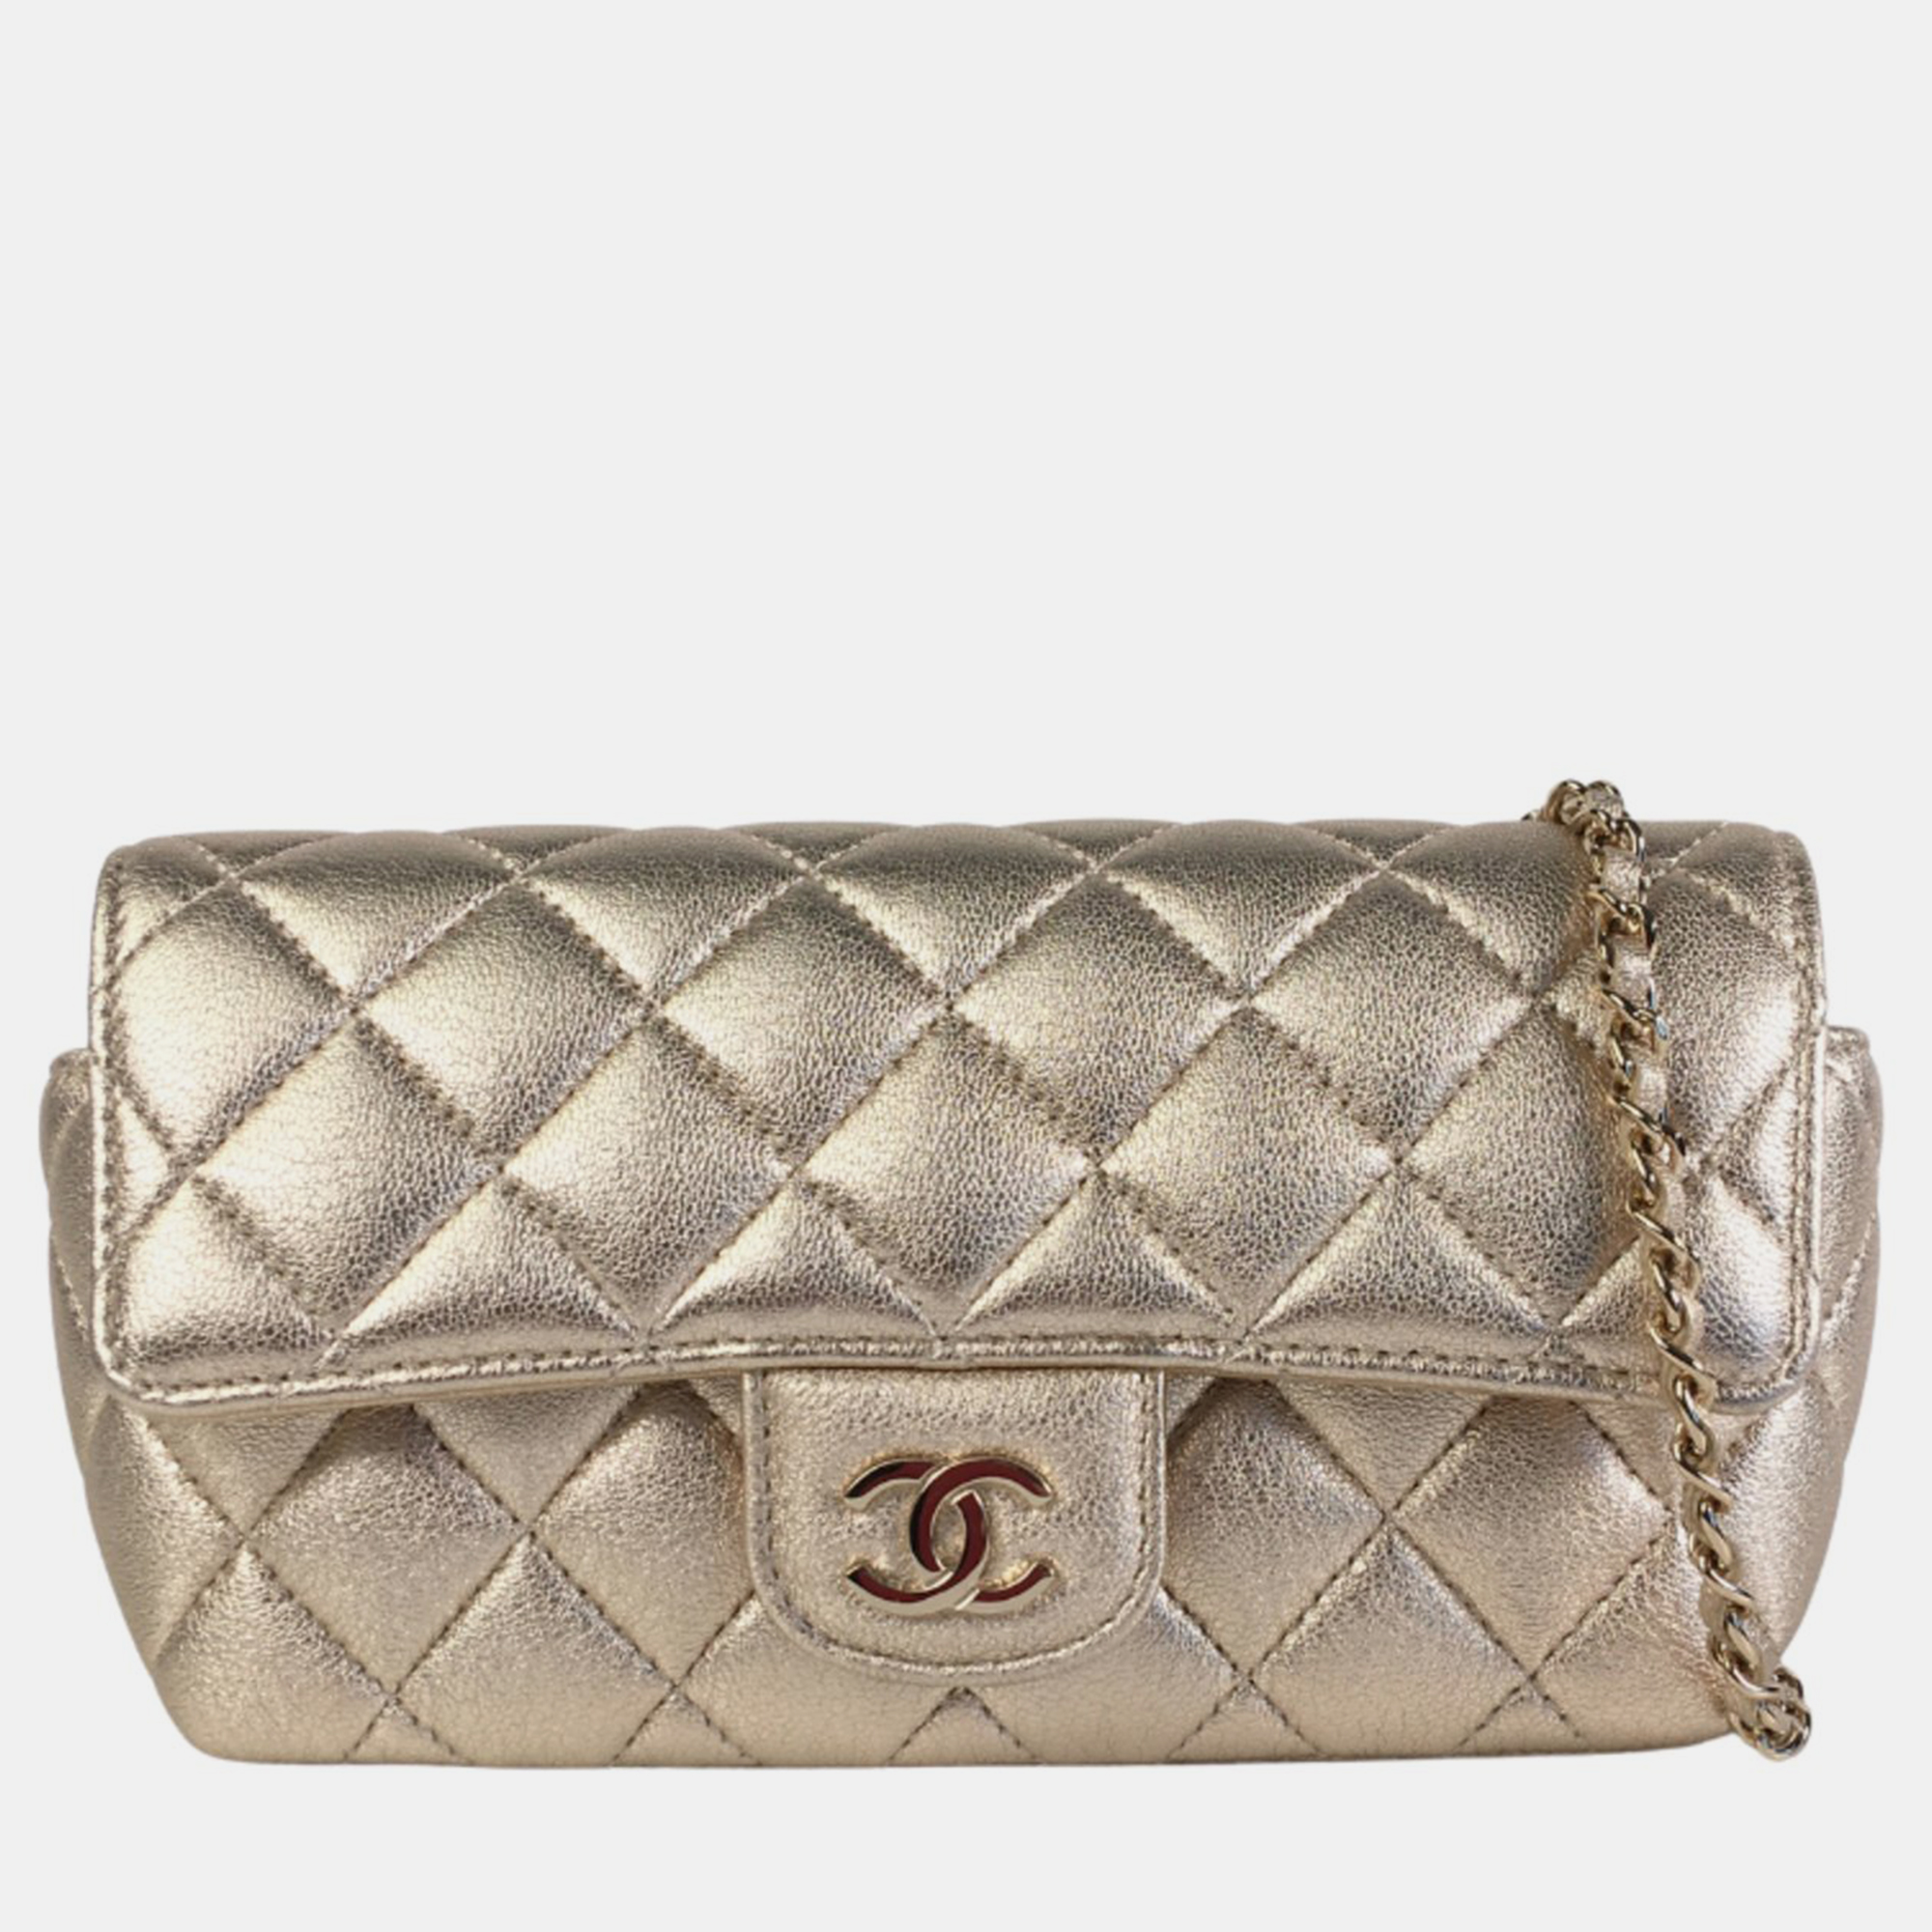 Chanel metallic classic rectangular mini flap bag